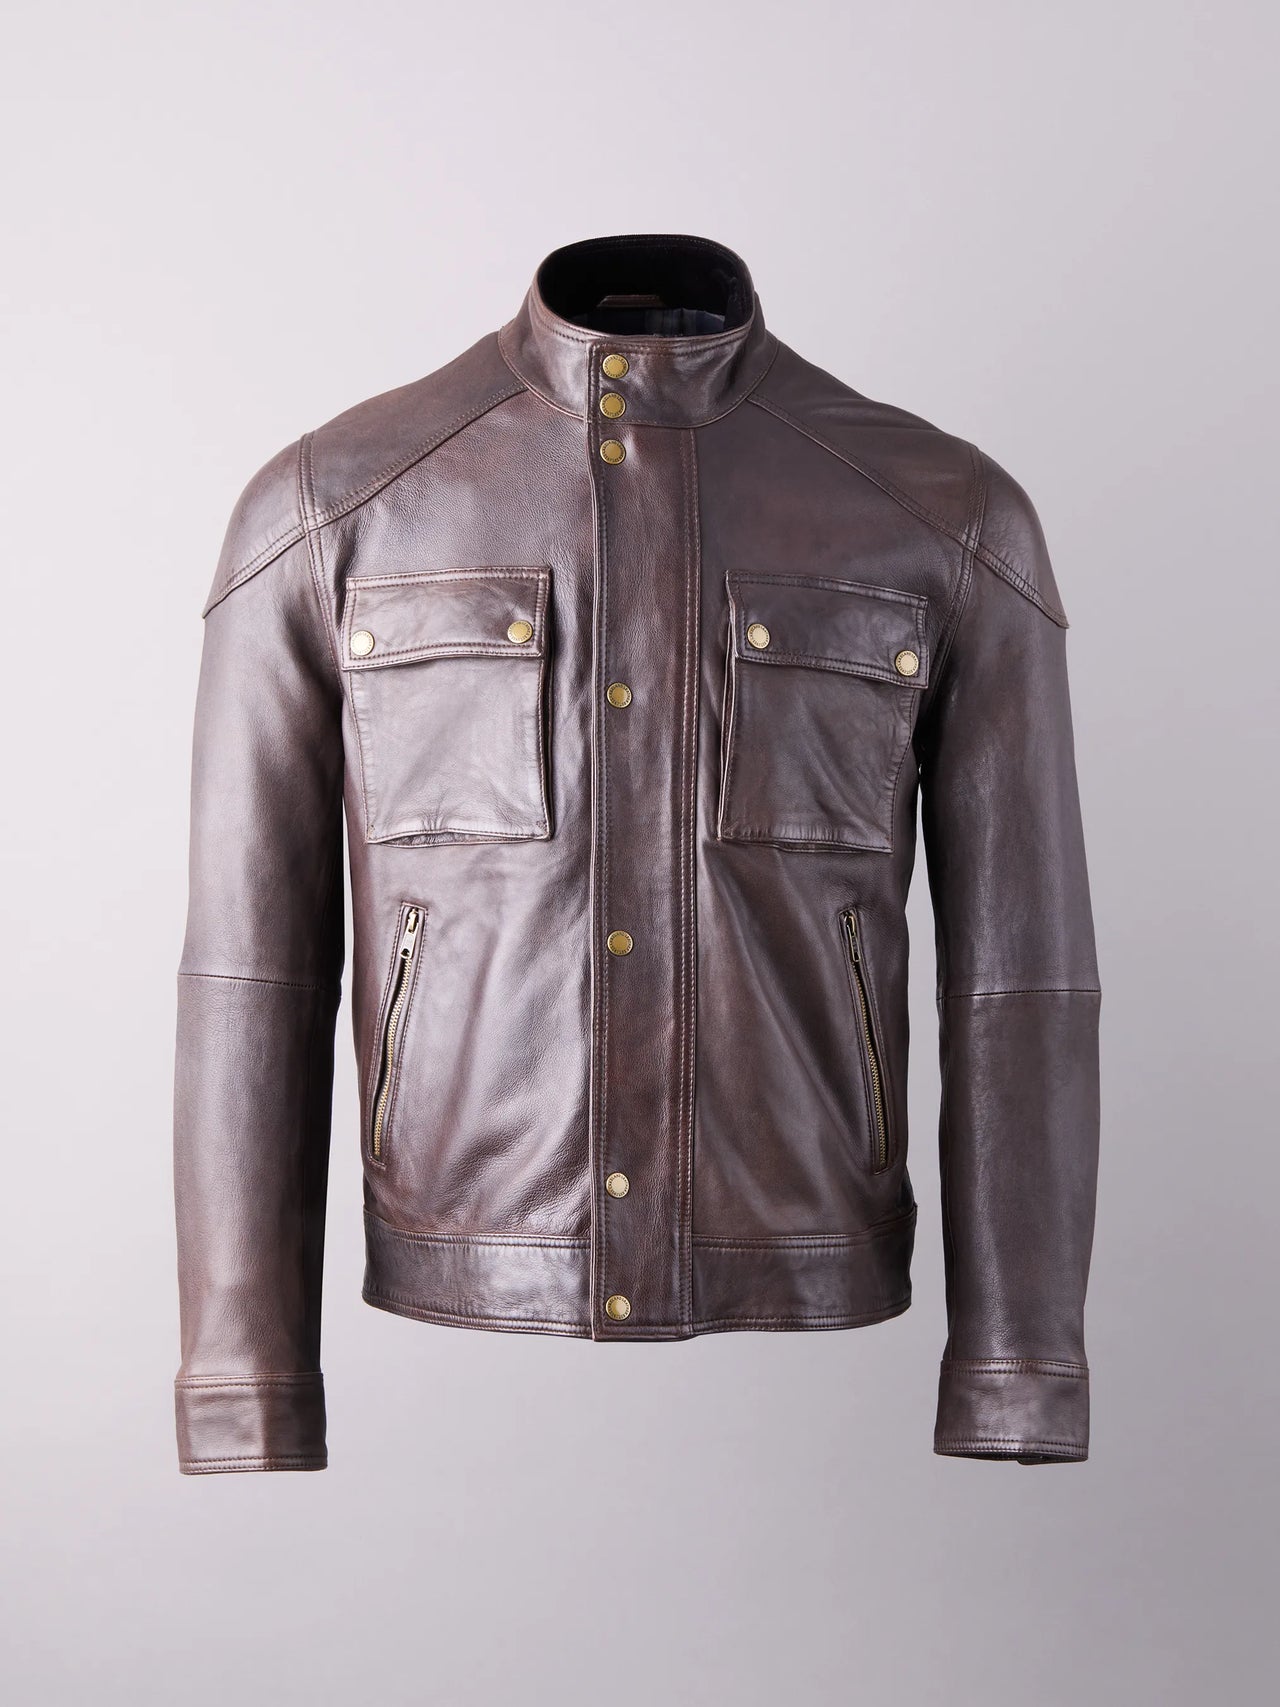 Lakeland Bowston Leather Jacket - Chocolate Brown